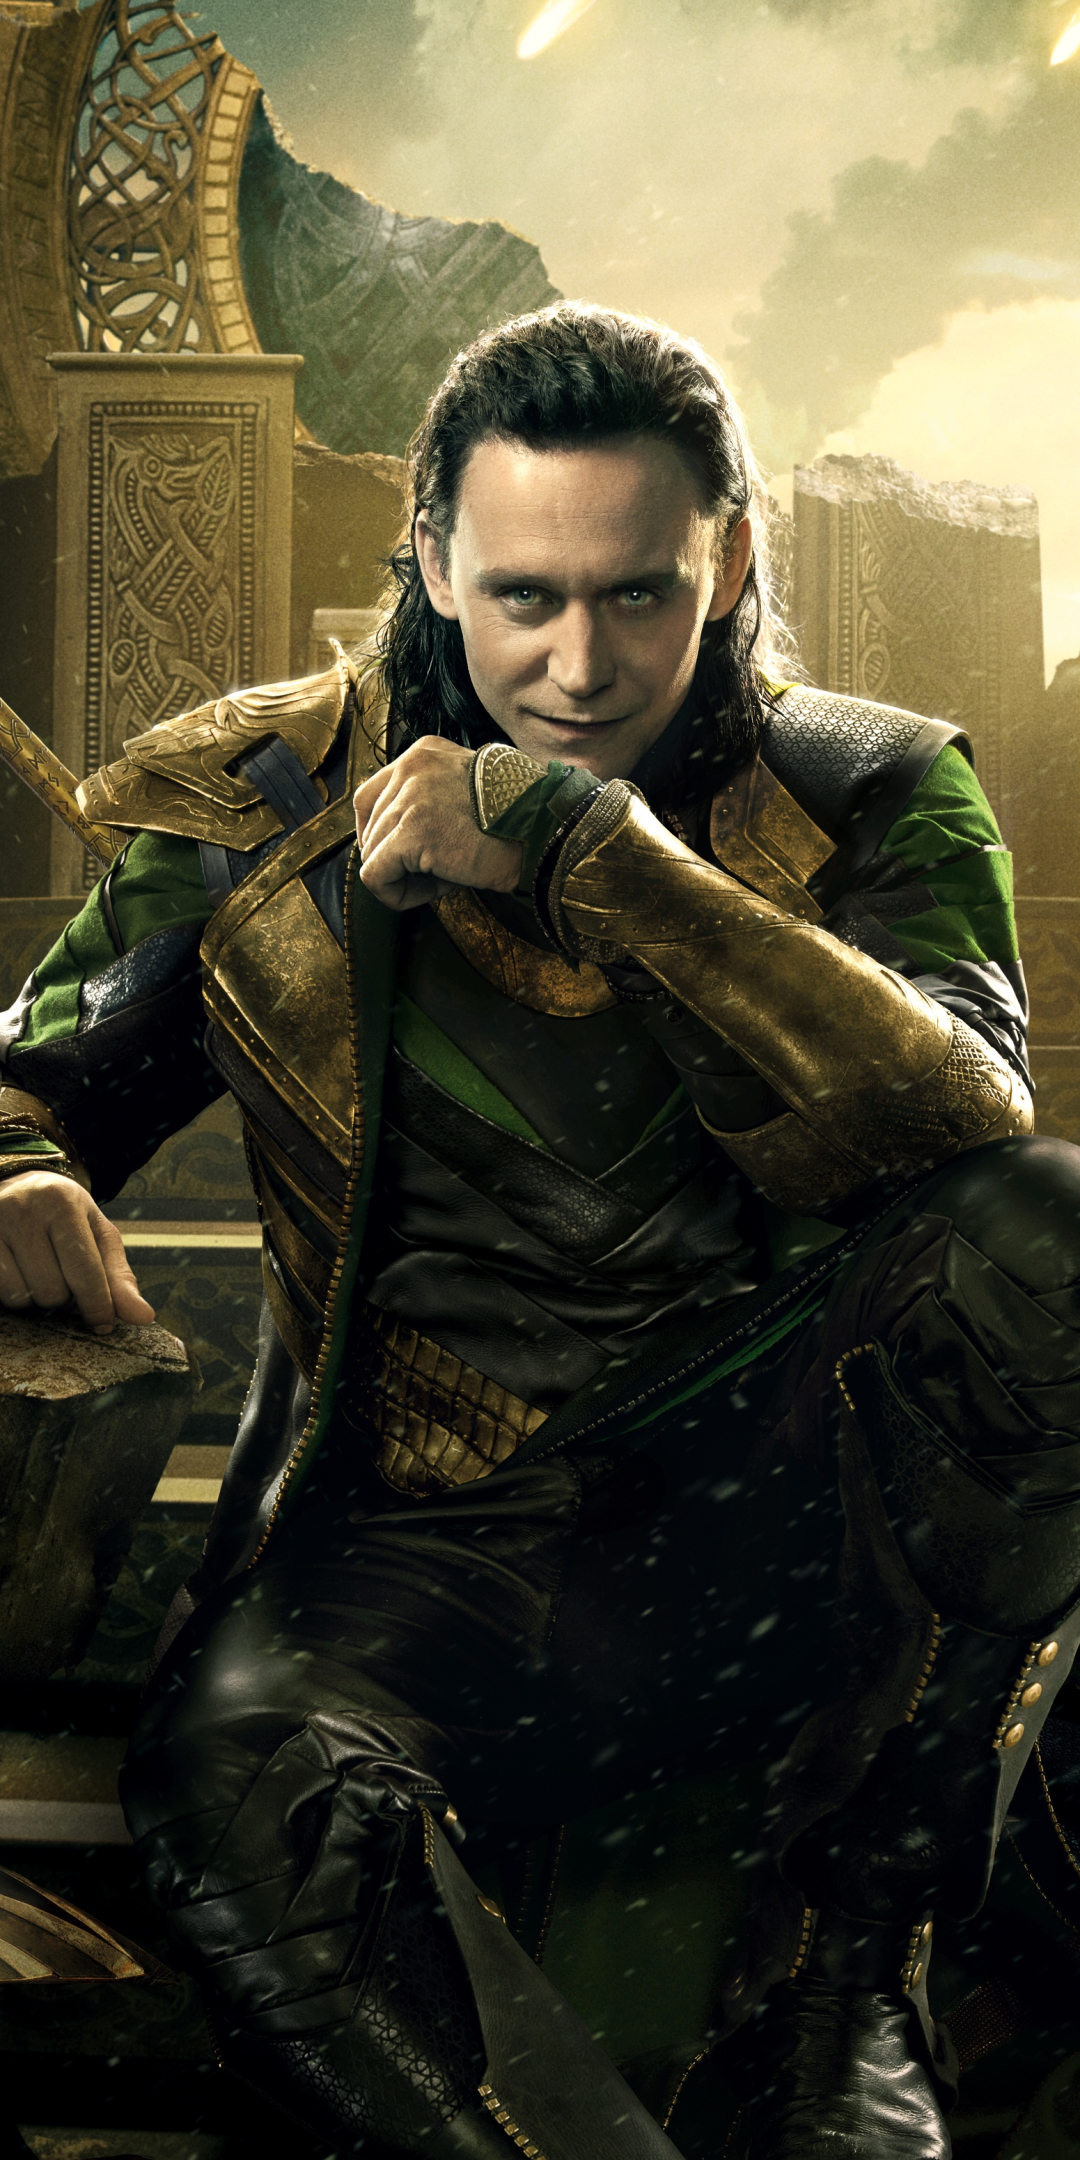 Descarga gratuita de fondo de pantalla para móvil de Películas, Thor, Loki (Marvel Cómics), Tom Hiddleston, Thor: El Mundo Oscuro.